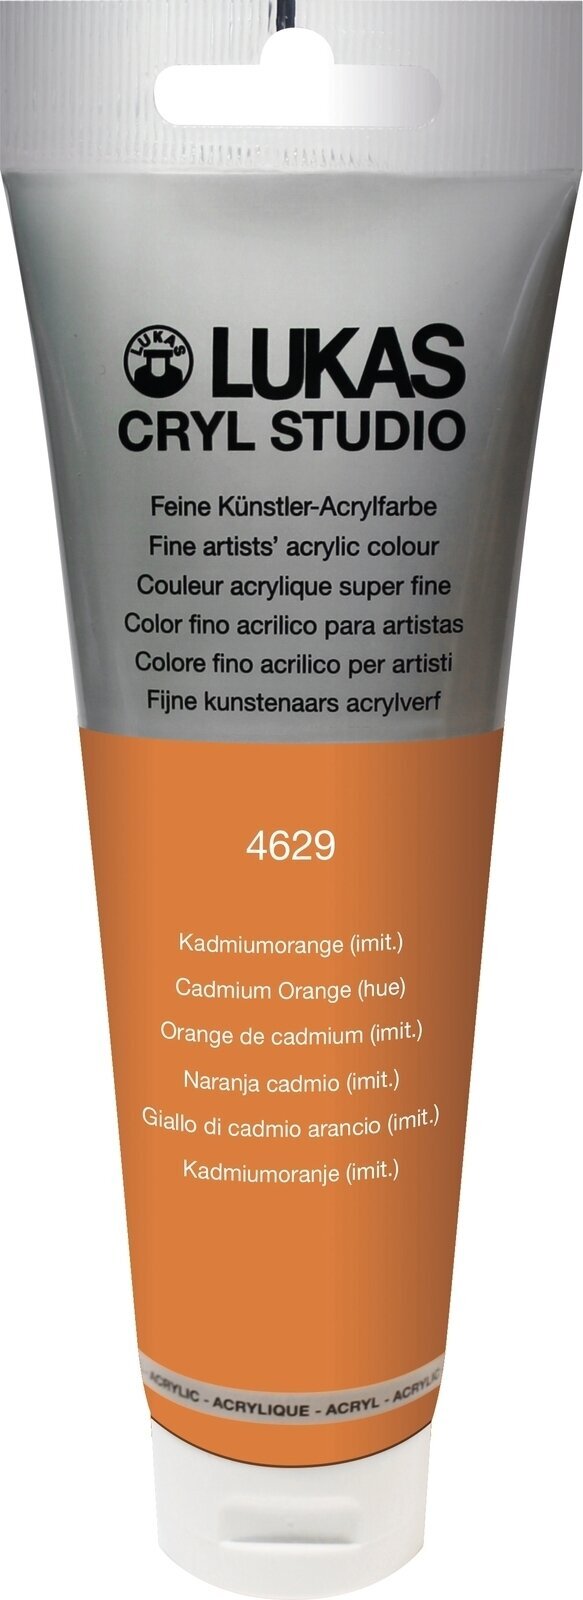 Акрилна боя Lukas Cryl Studio Acrylic Paint Plastic Tube АКРИЛНА боя Cadmium Orange Hue 125 ml 1 бр